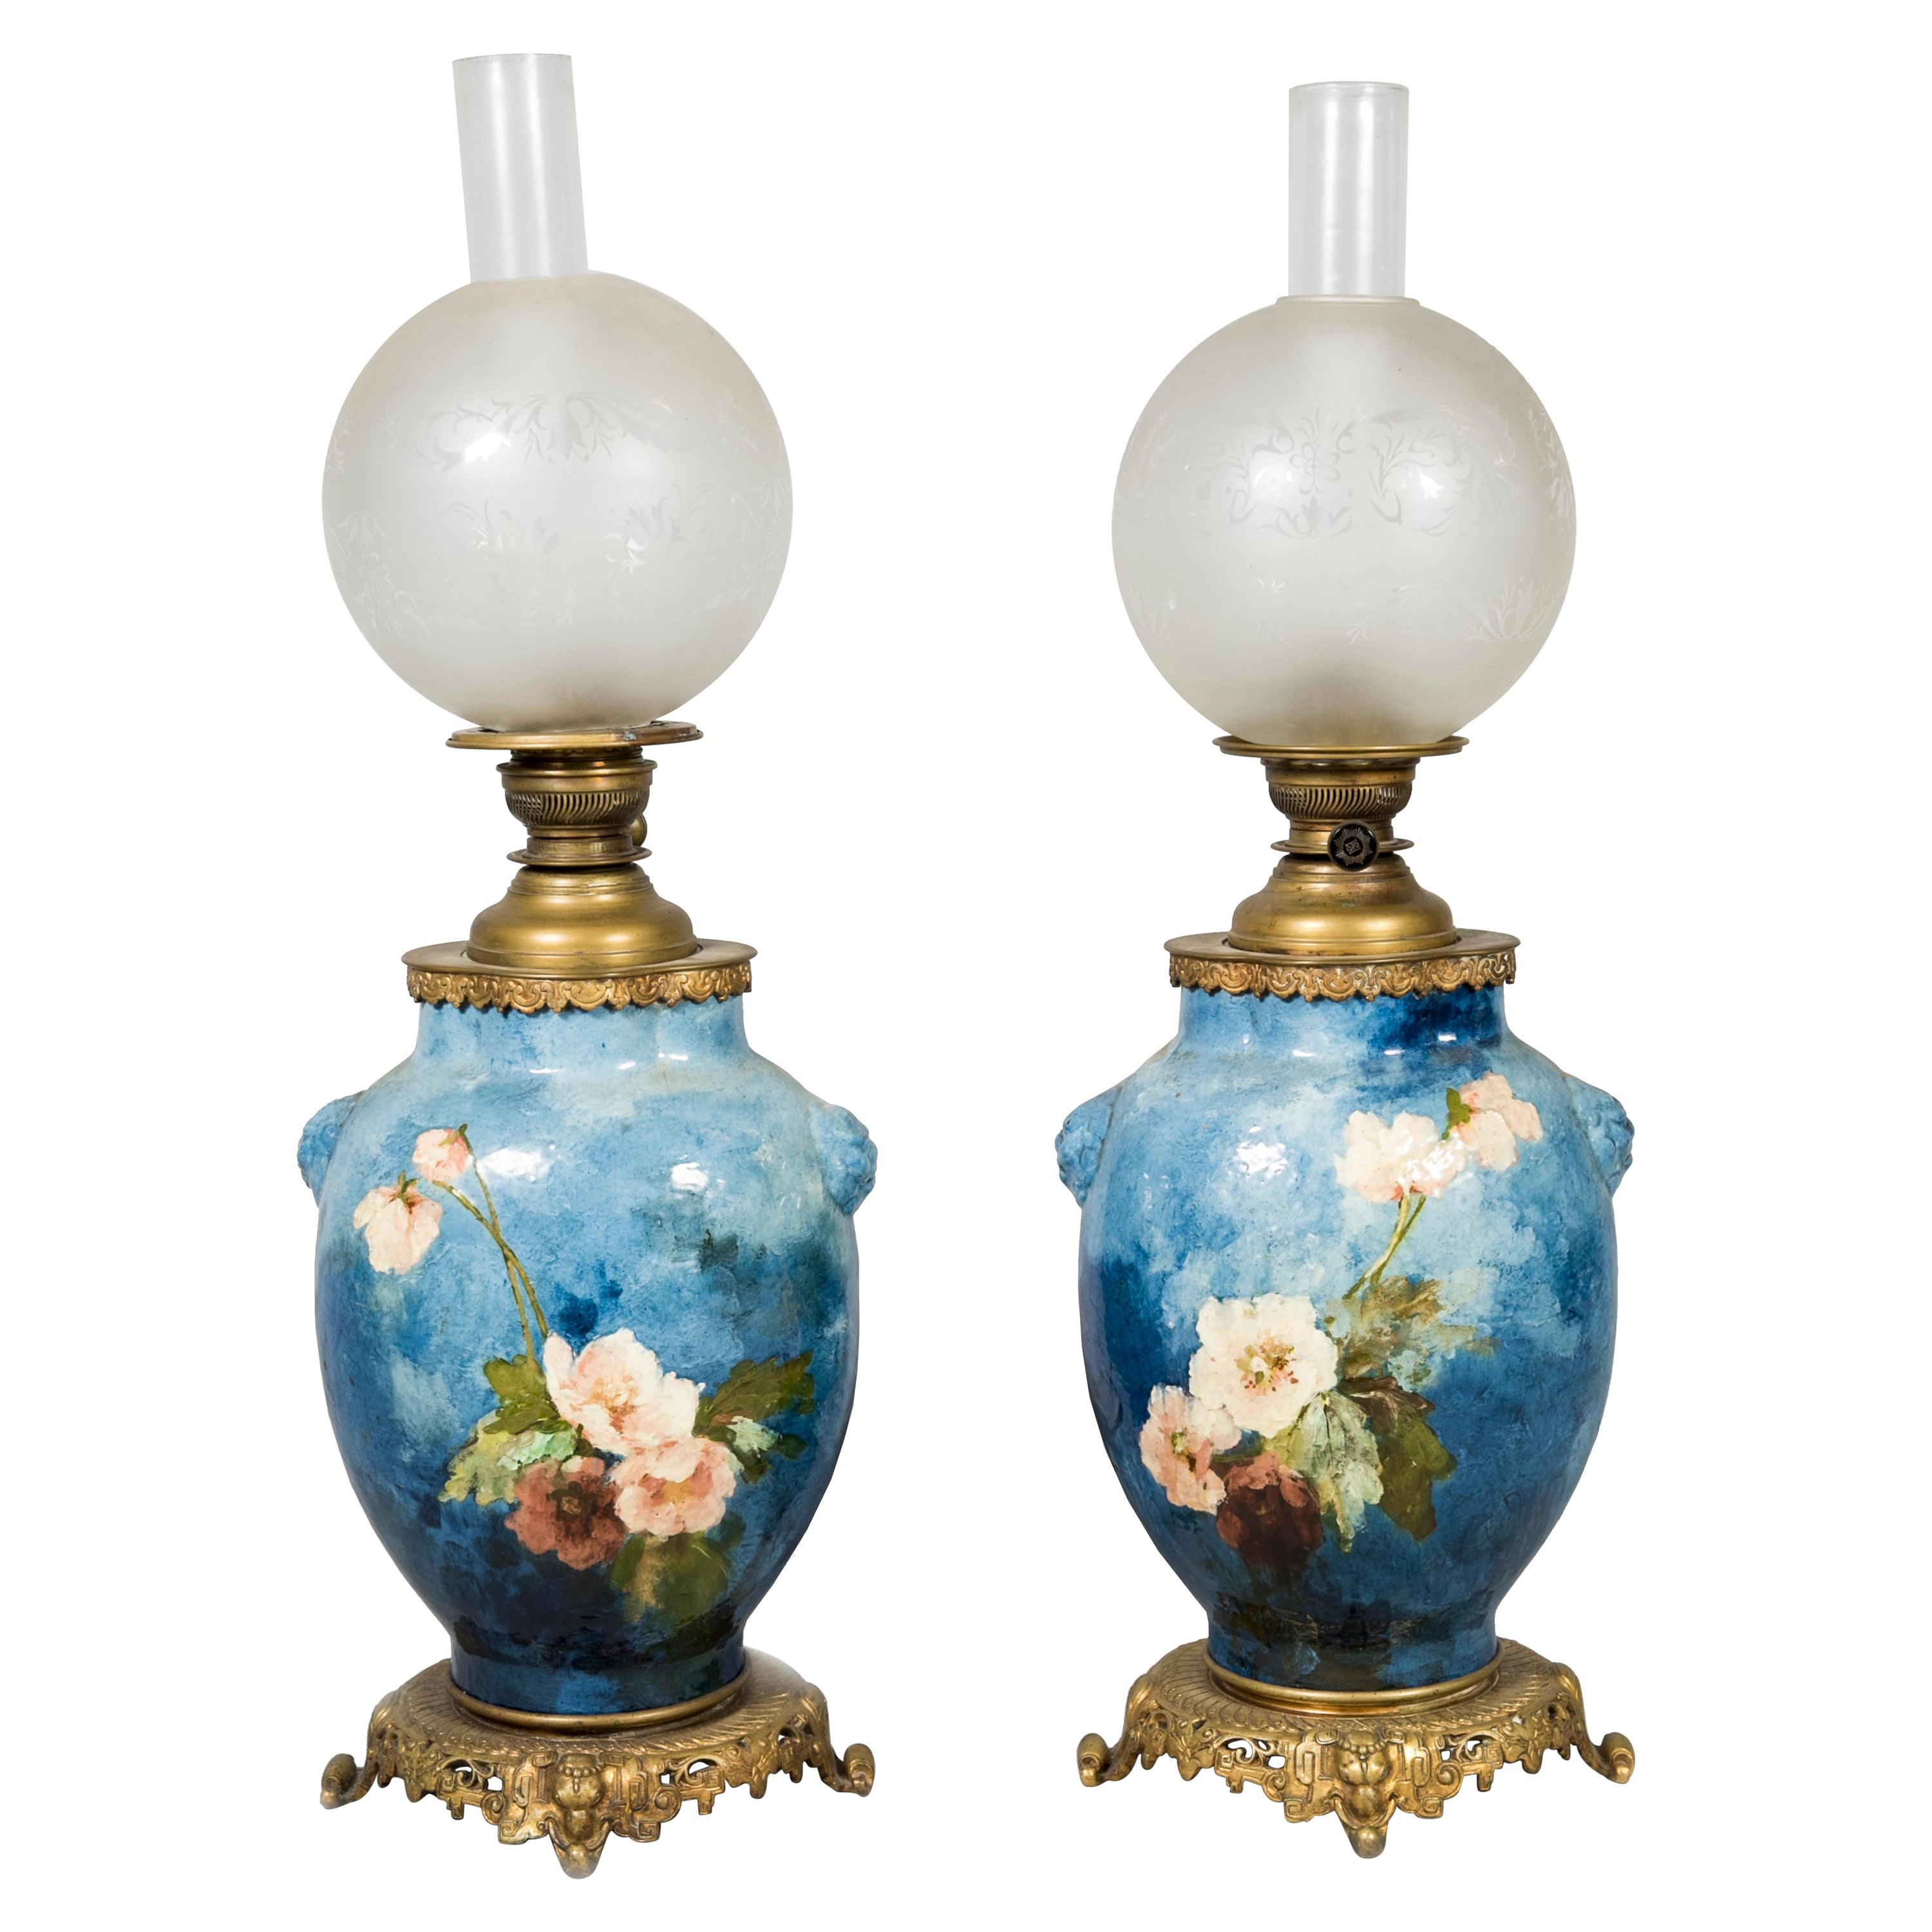 Paar keramische Lampen aus dem XIX. Jahrhundert von Haviland